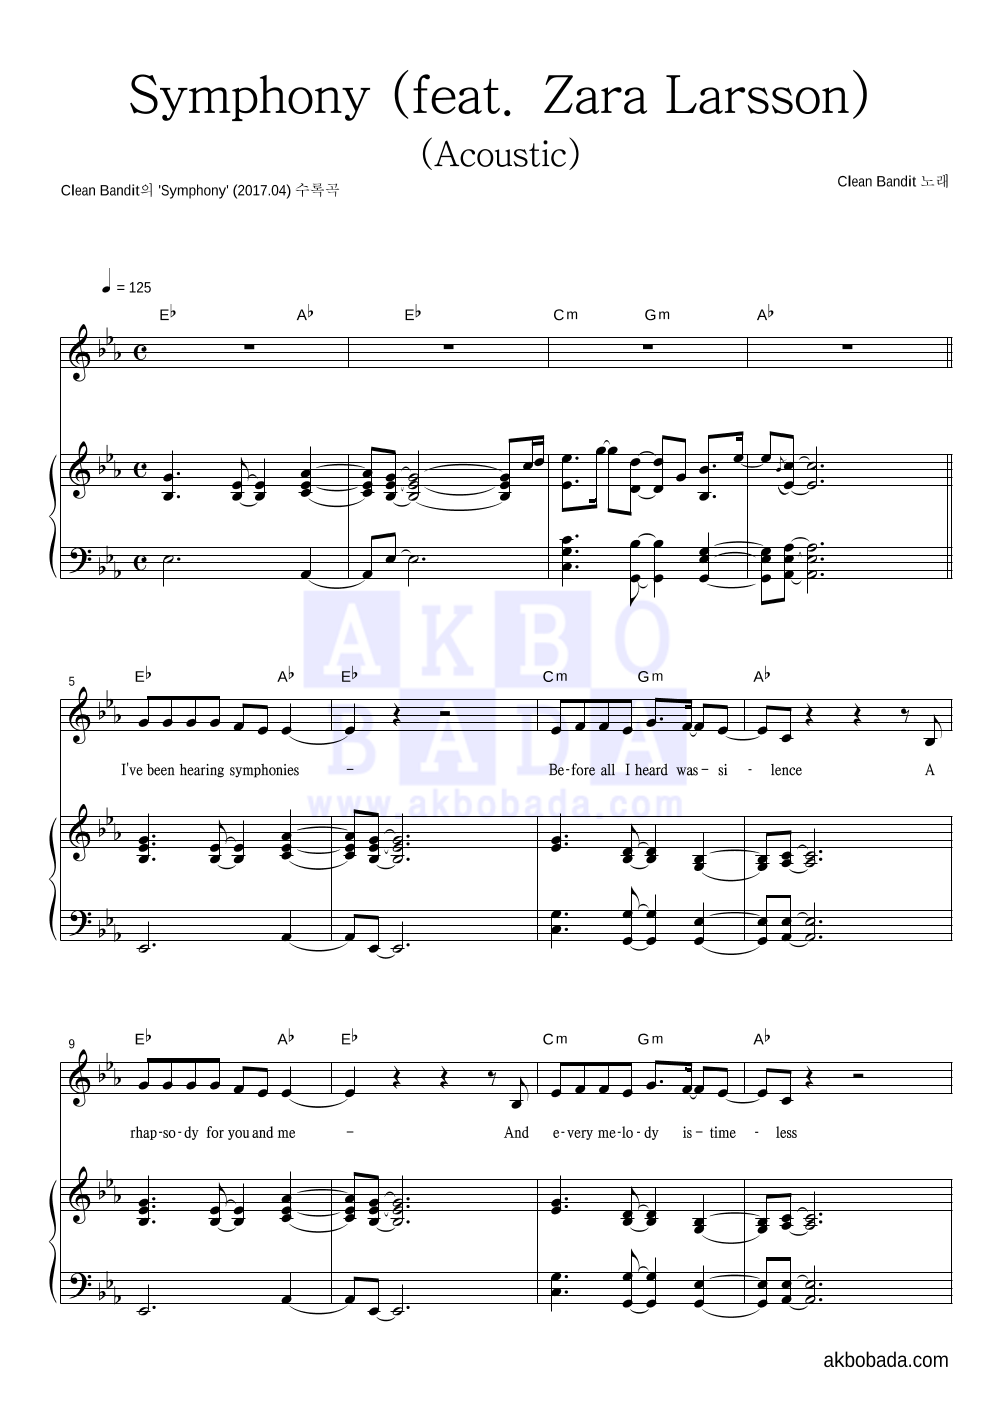 Clean Bandit - Symphony (feat. Zara Larsson) (Acoustic) 피아노 3단 악보 